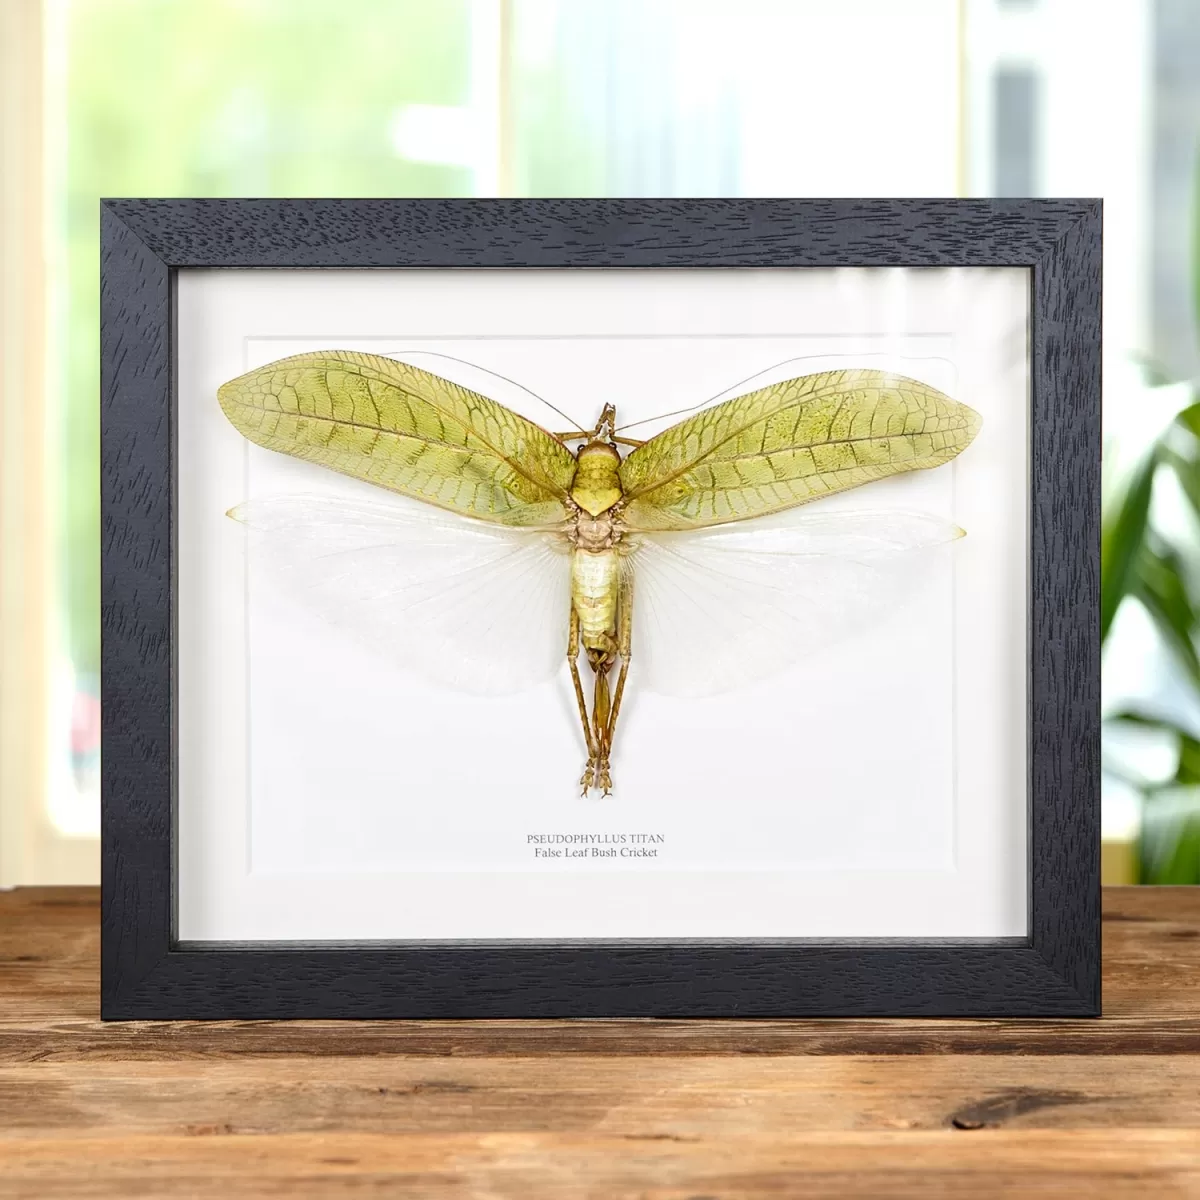 Minibeast False Leaf Bush Cricket In Box Frame (Pseudophyllus titan)